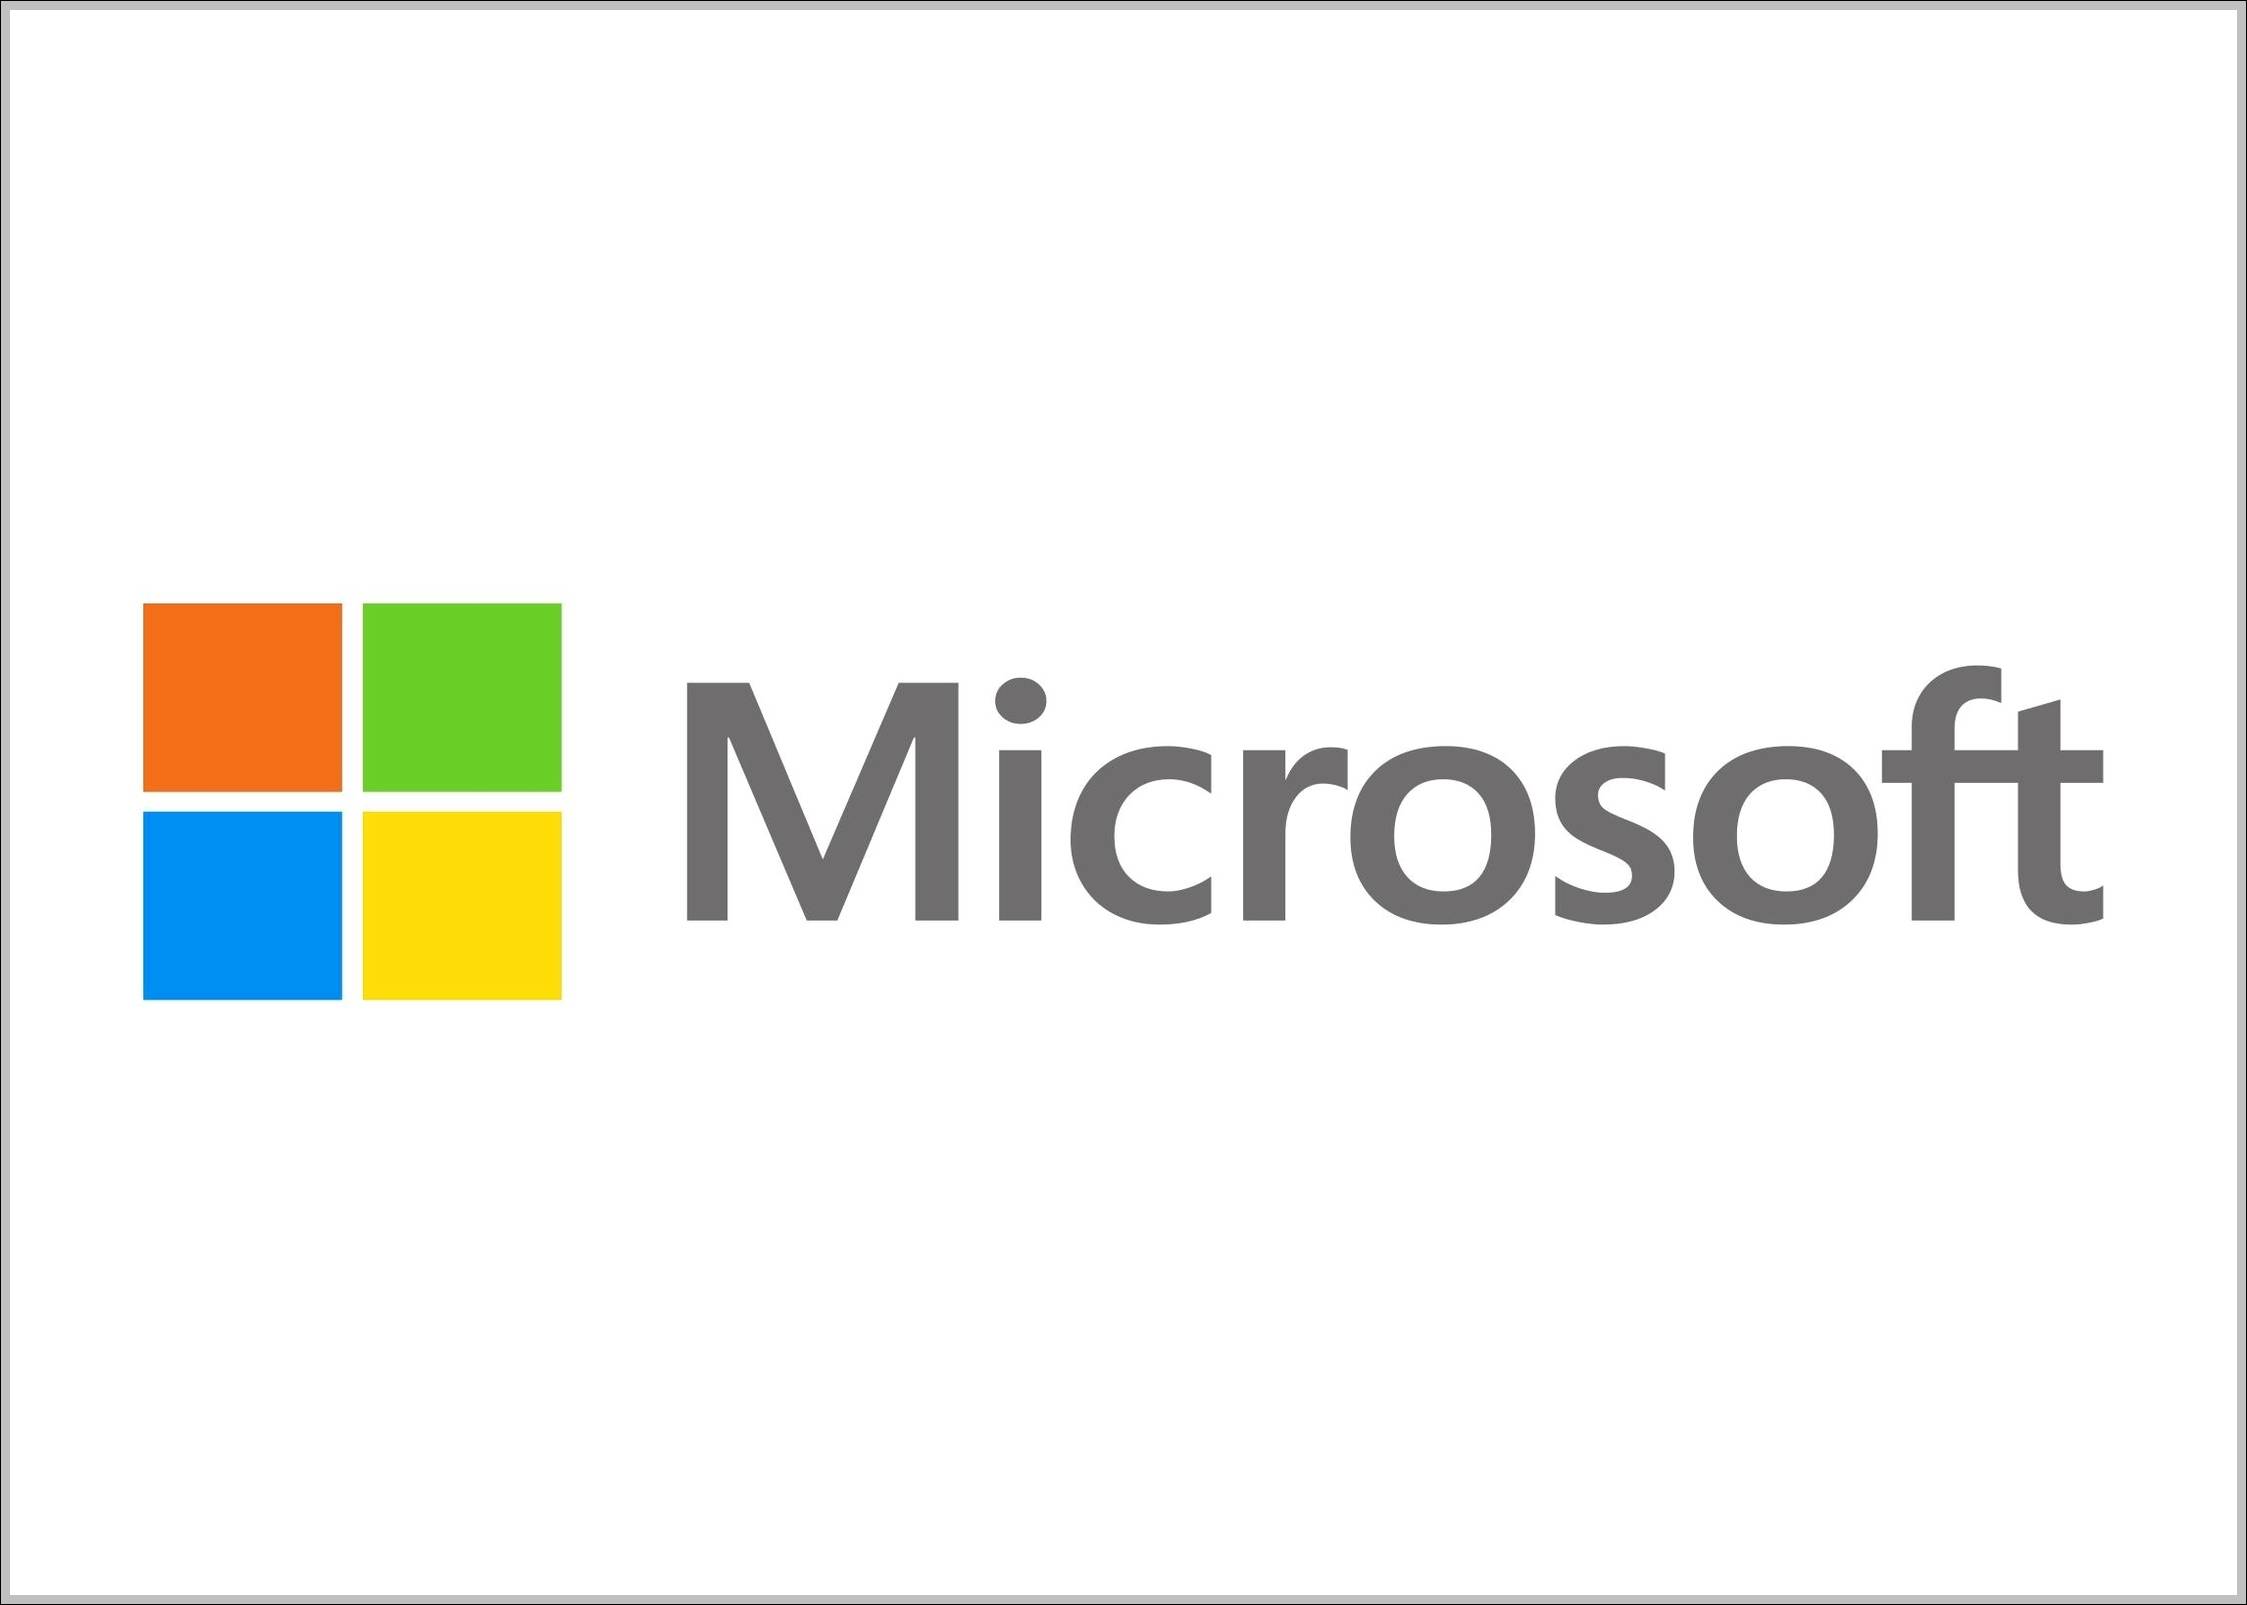 Microsoft logo and sign